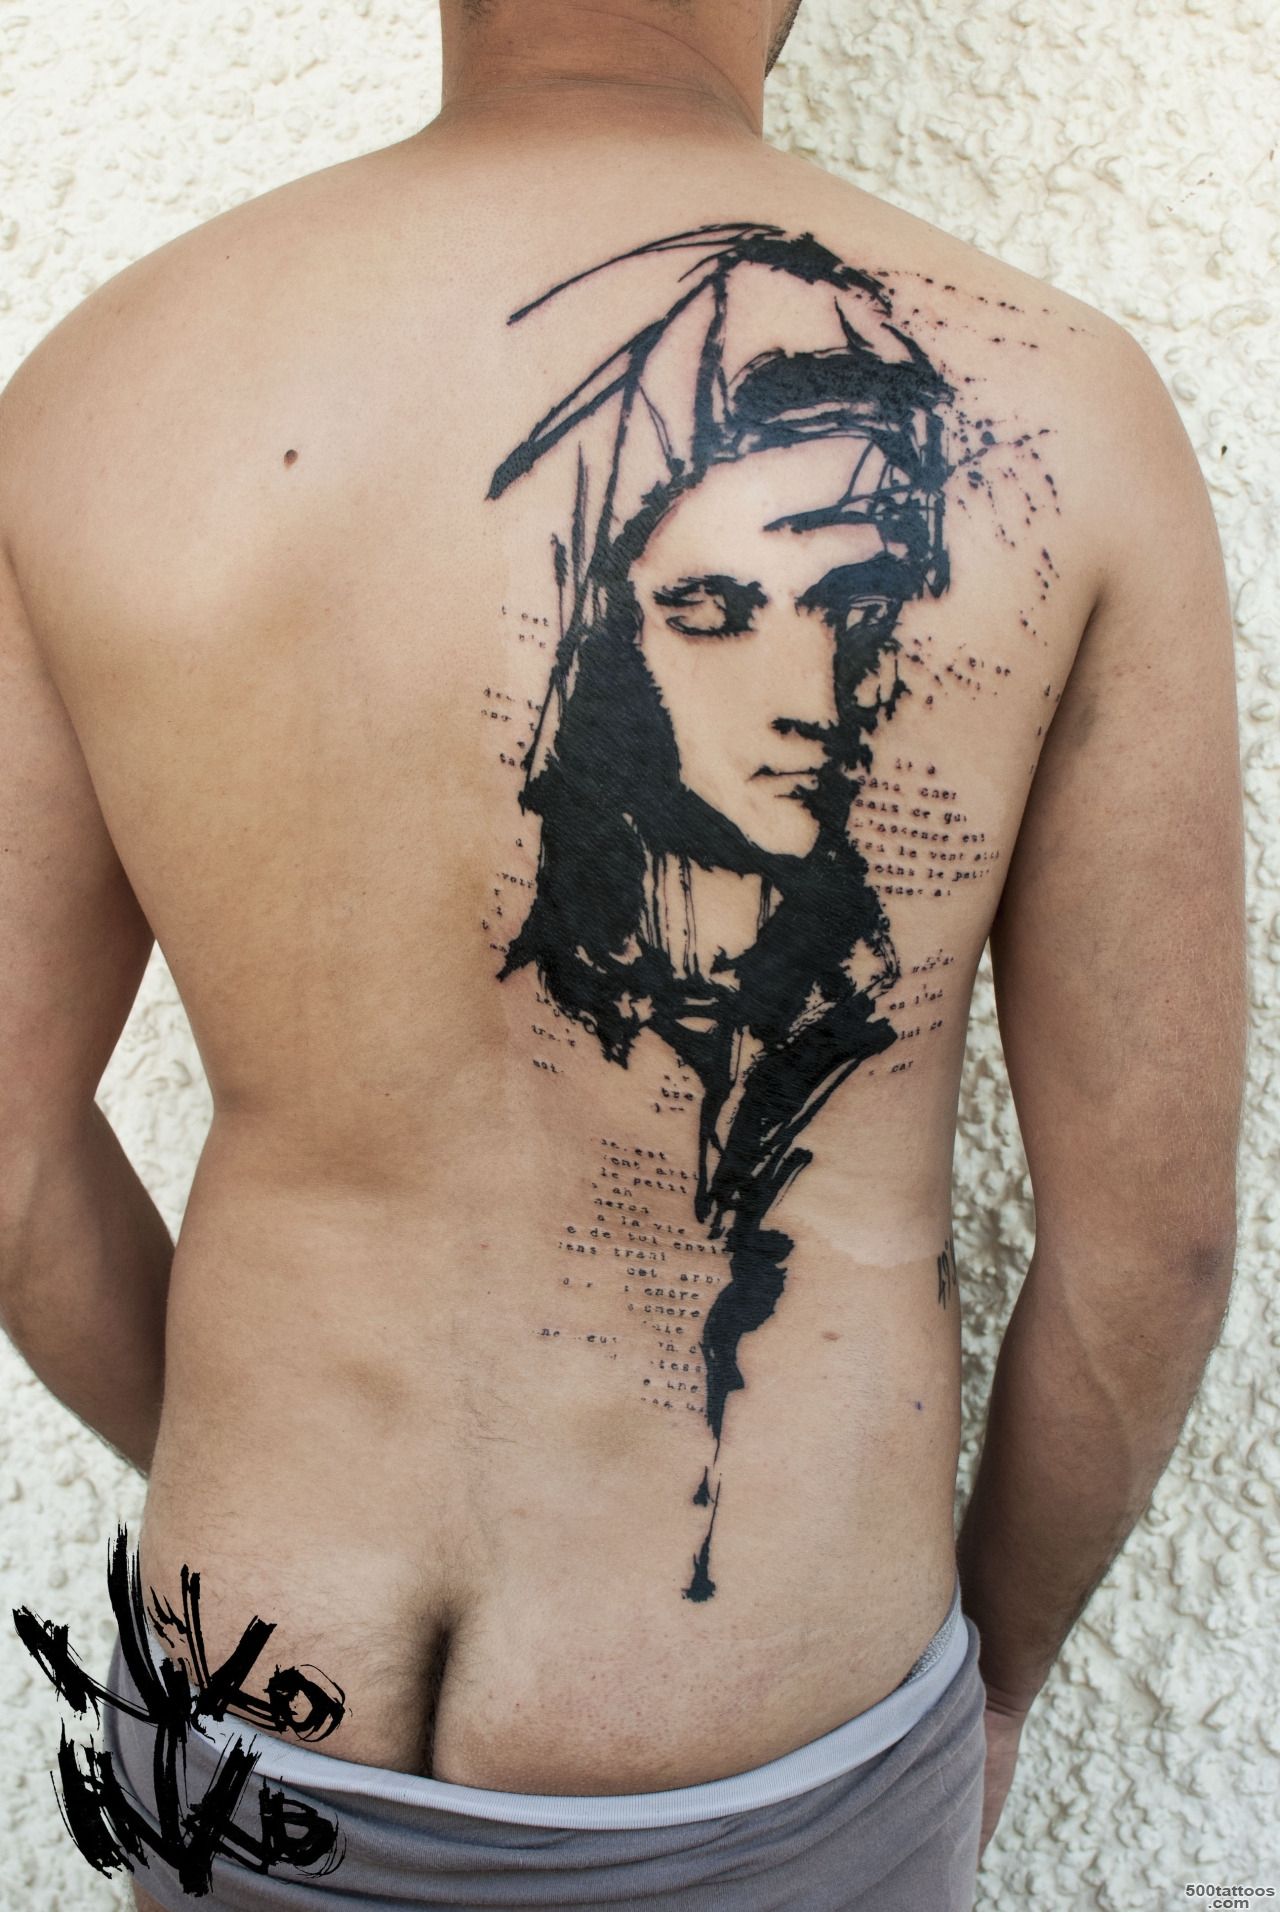 Tattoo-done-by-Niko-Inko-at-Belly-Button-tattoo-shop-#tattoo-..._40.jpg